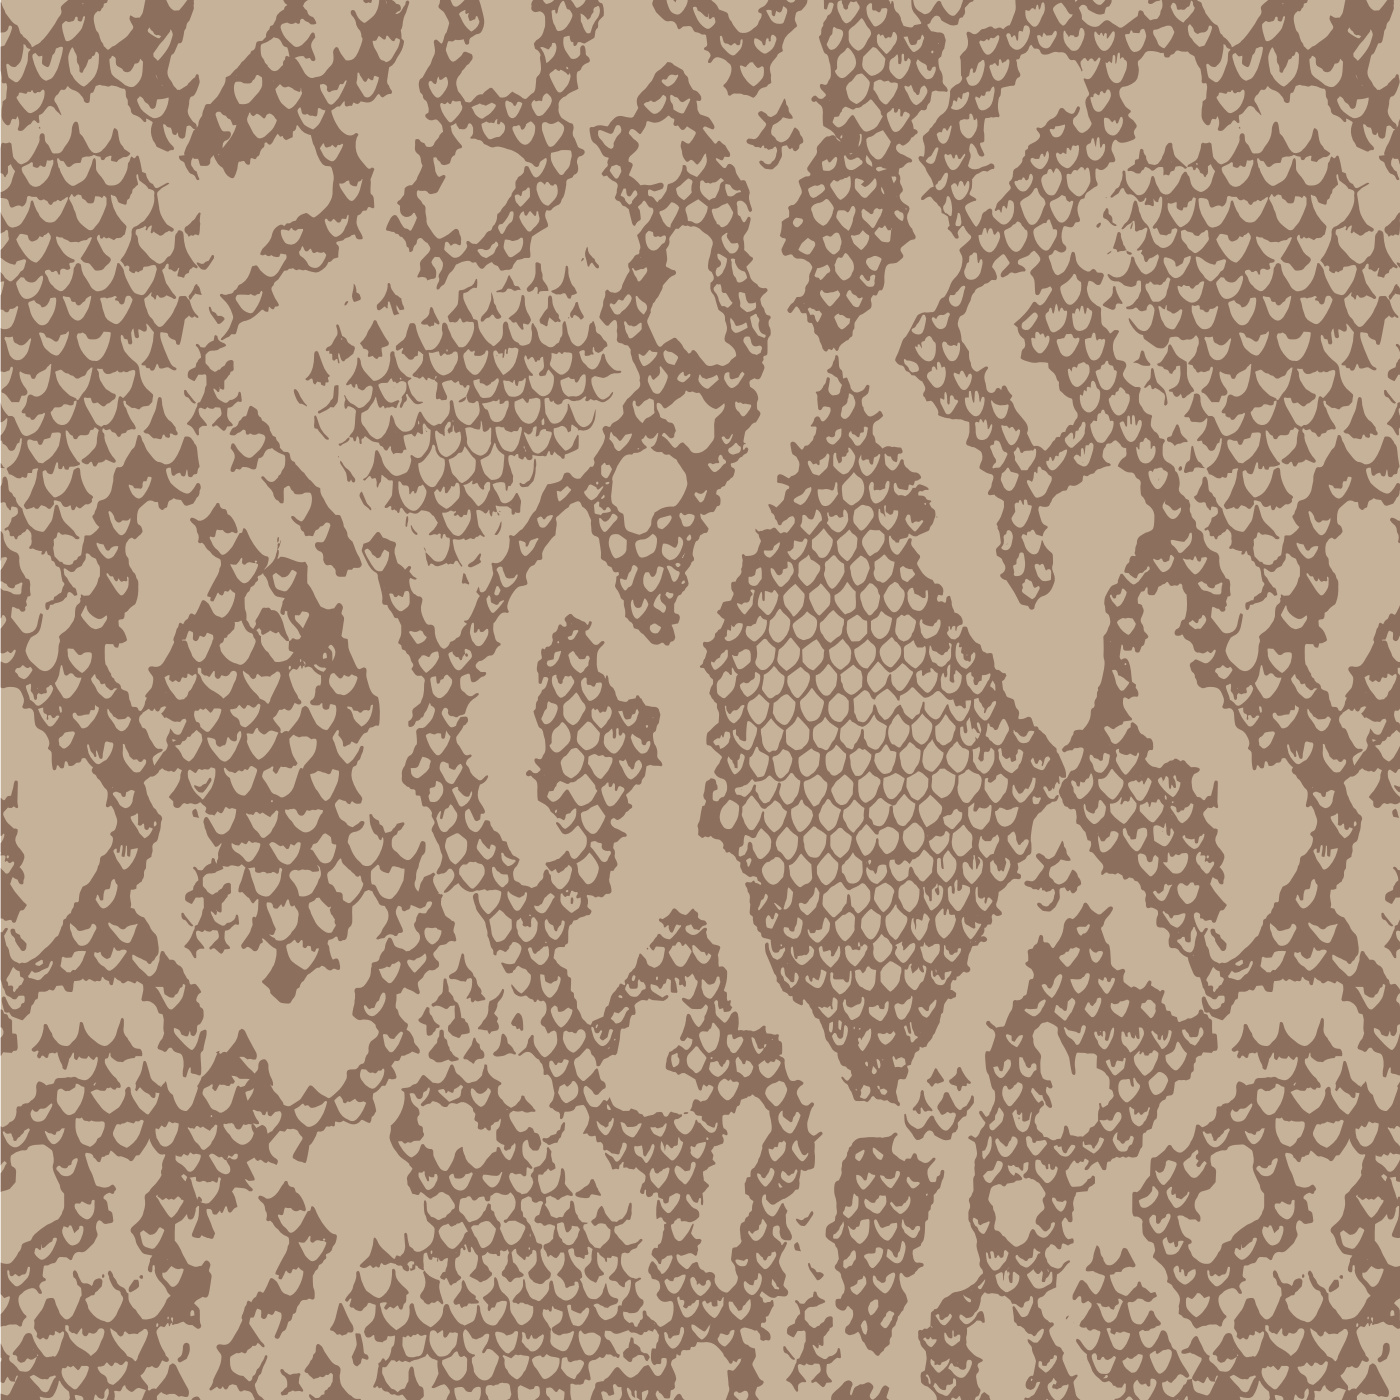 Snakeskin Pattern Wallpaper